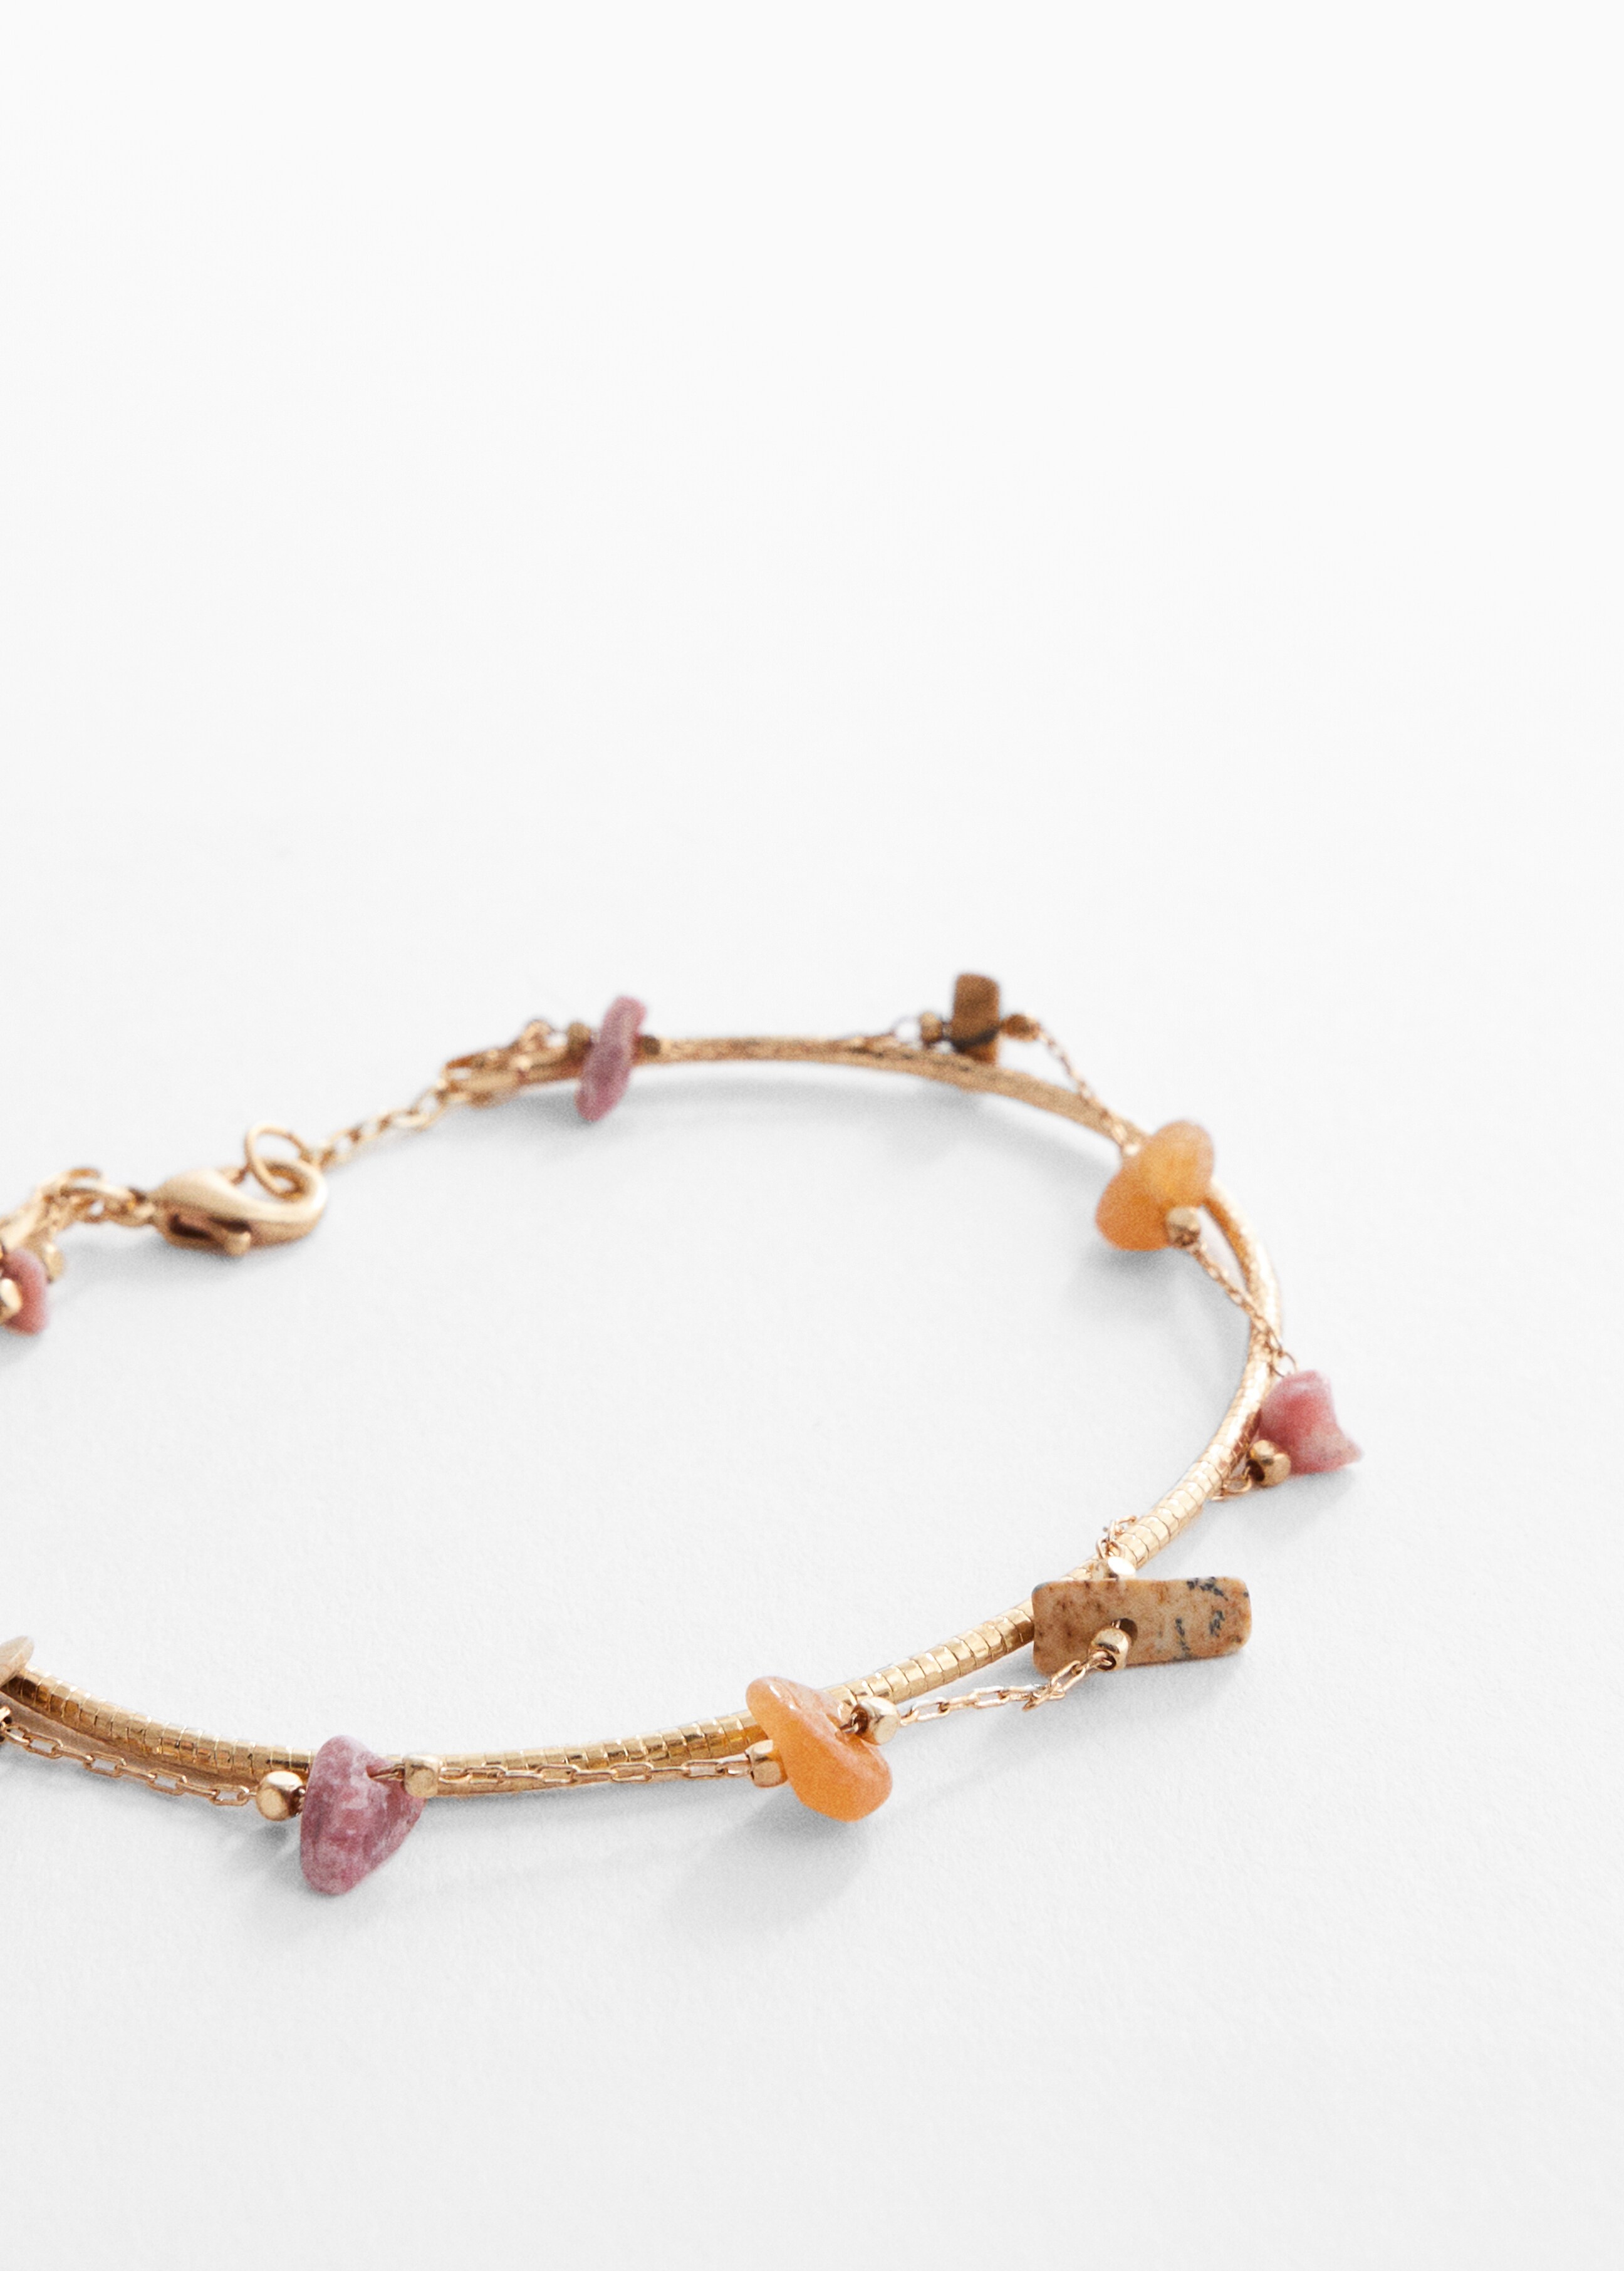 Bead and stone bracelet  - Medium plane